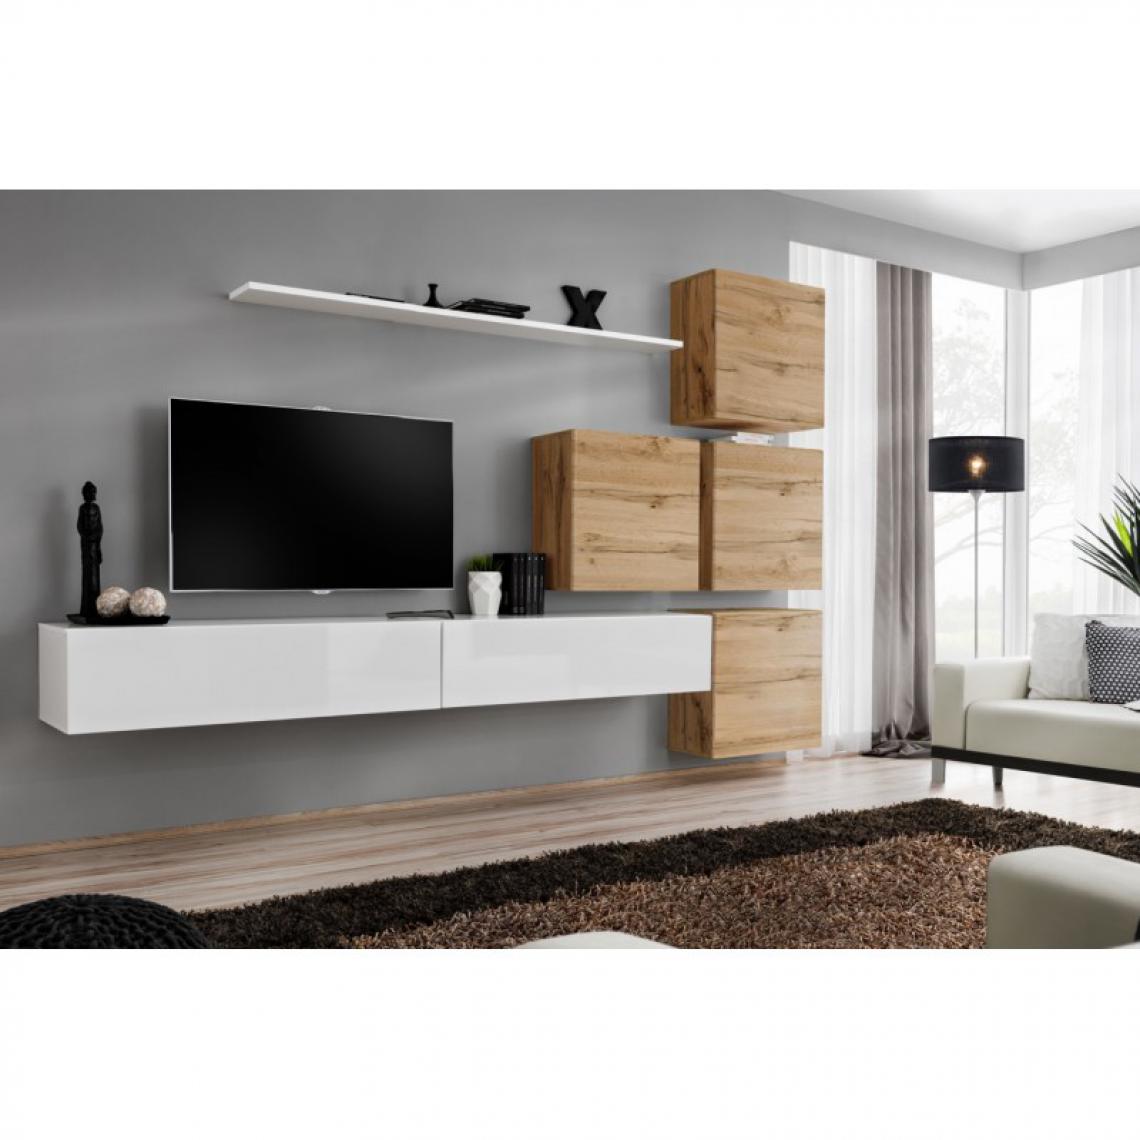 Ac-Deco - Meuble TV Mural Design Switch IX 310cm Blanc & Naturel - Meubles TV, Hi-Fi